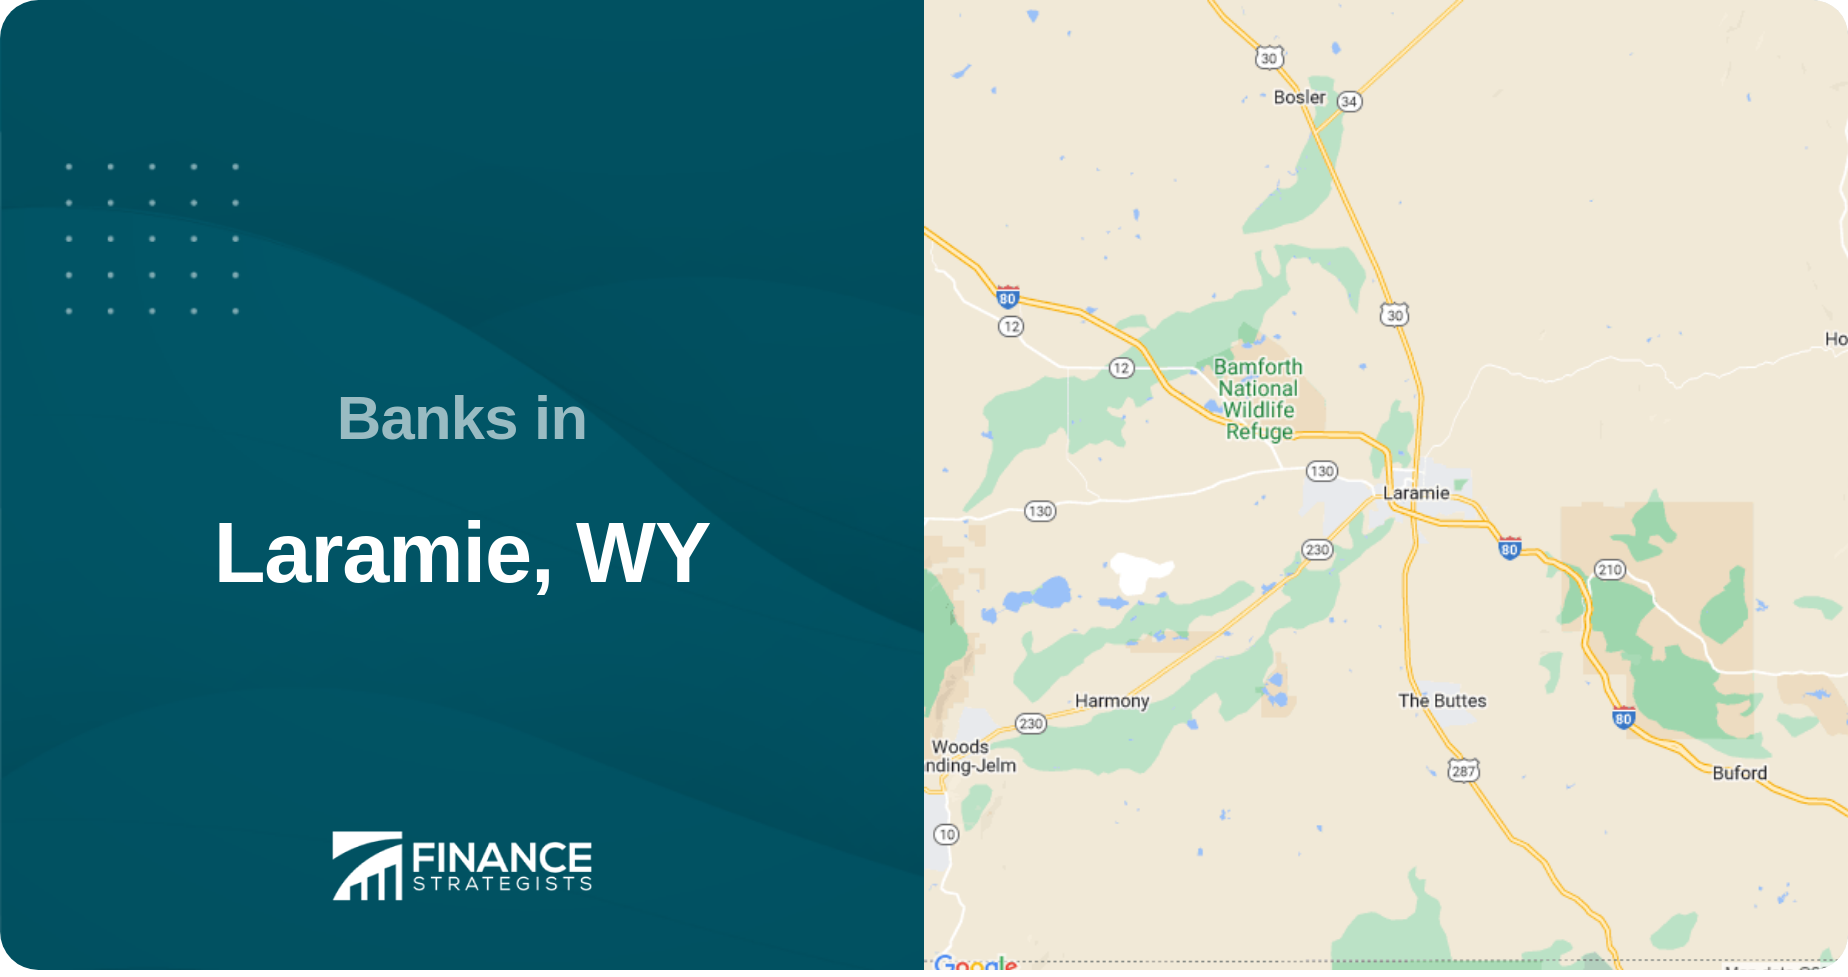 Banks in Laramie, WY